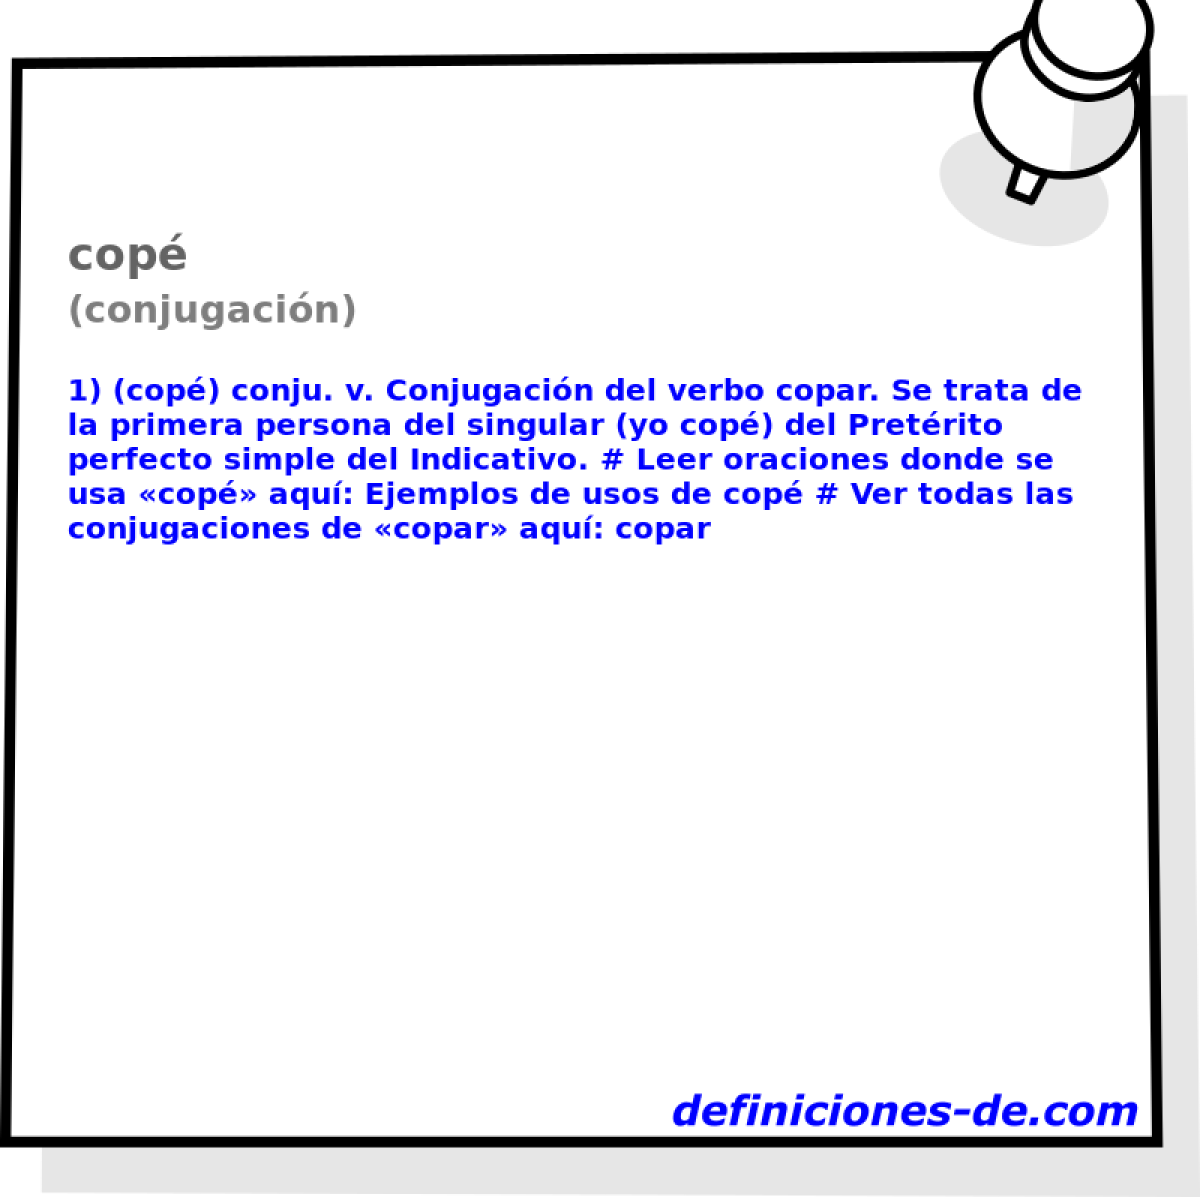 cop (conjugacin)